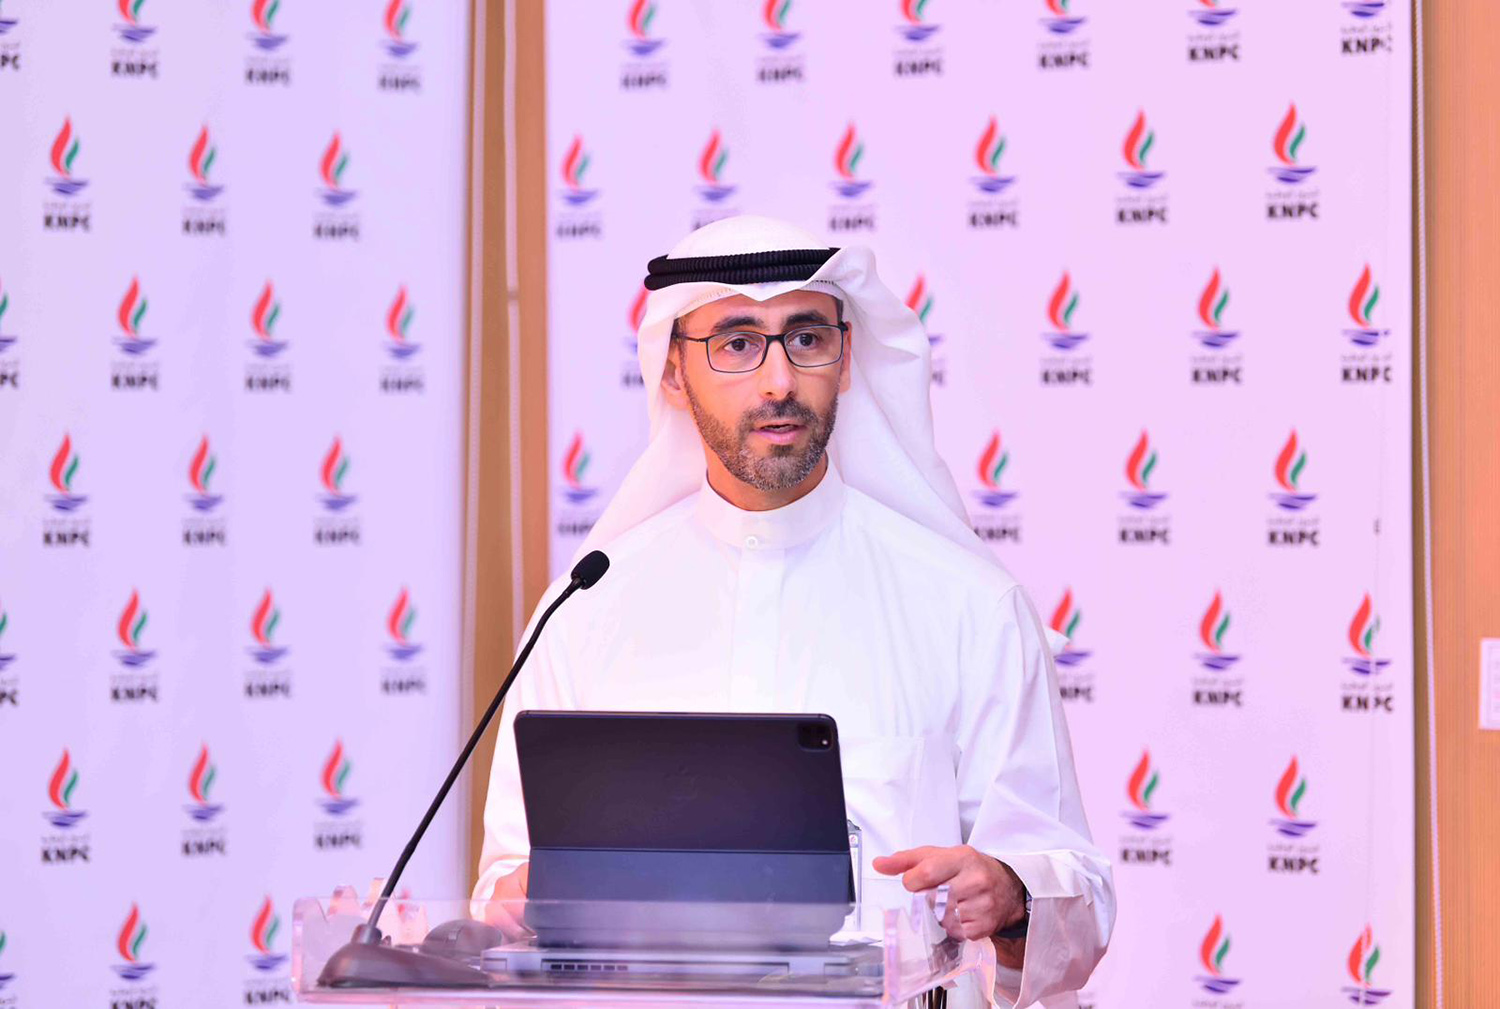 CEO of KPC Sheikh Nawaf Saud Al-Nasser Al-Sabah